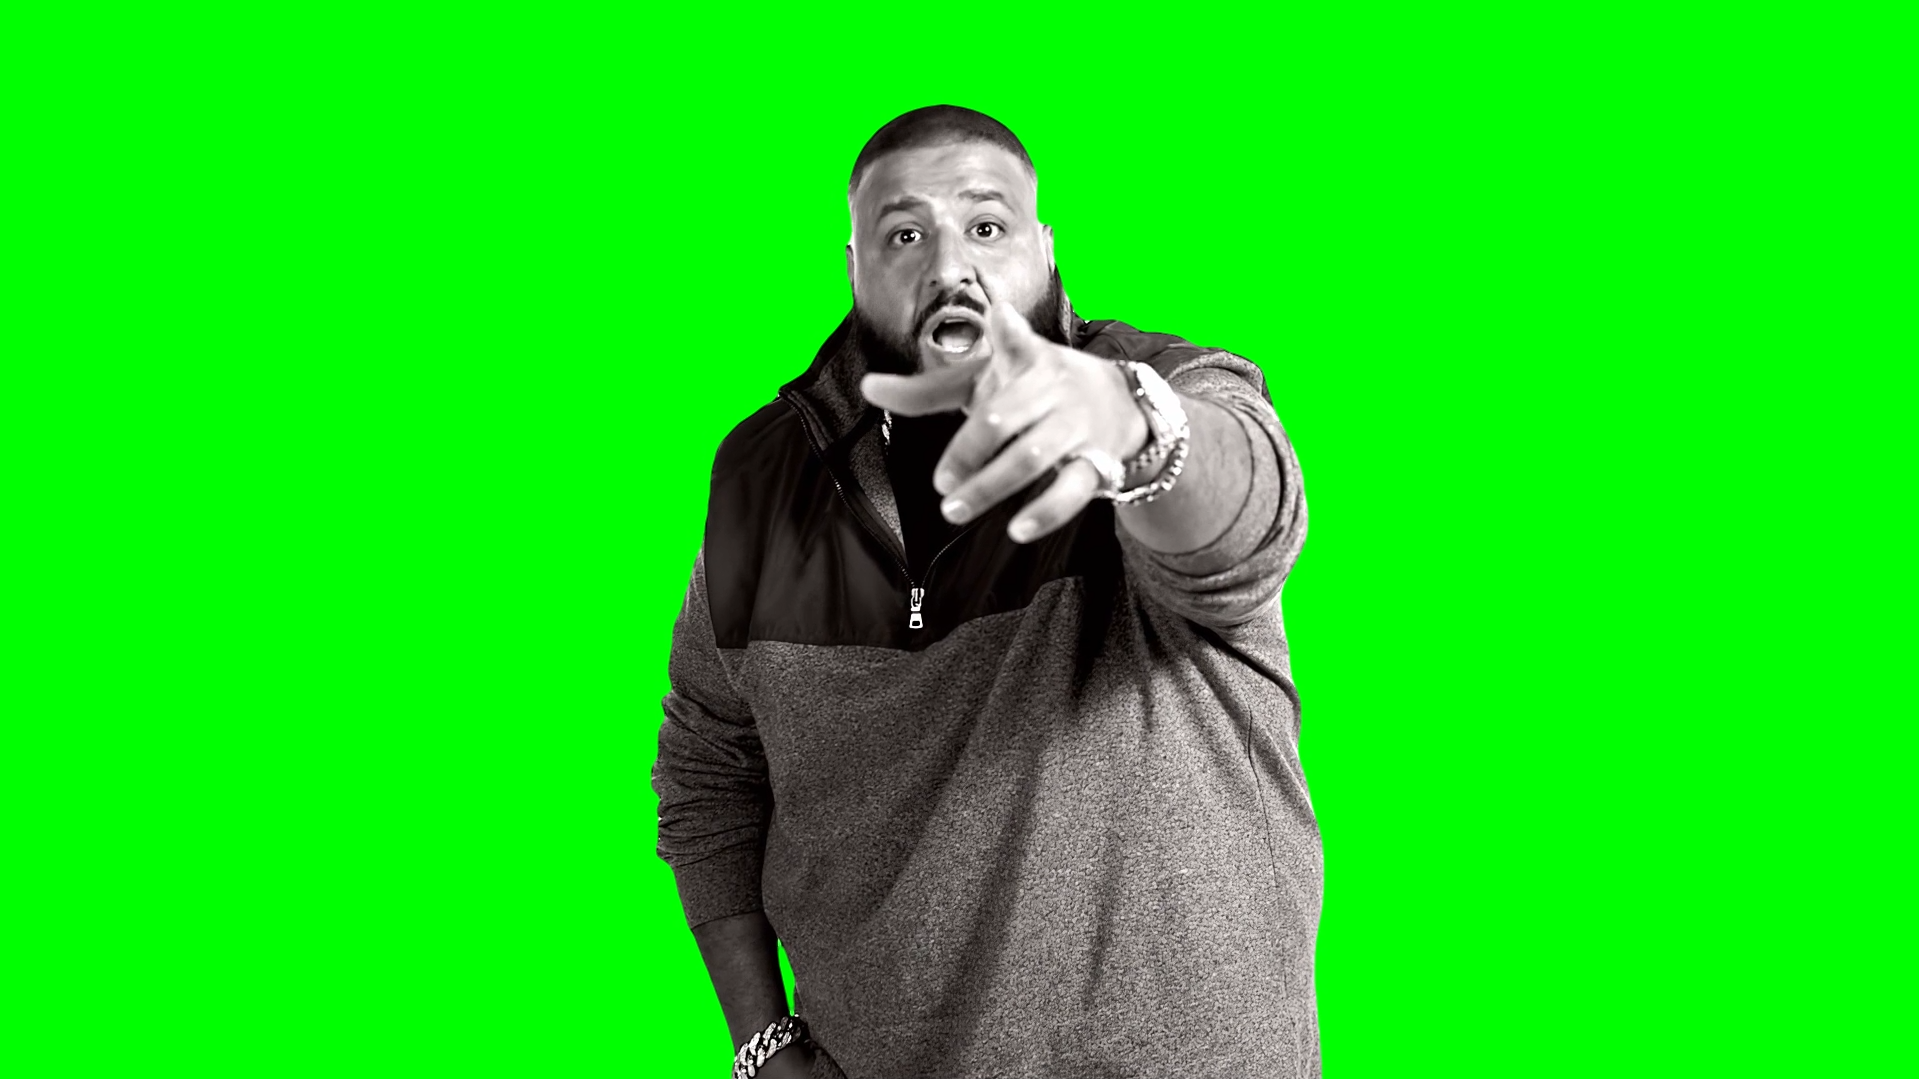 DJ Khaled saying ANOTHER ONE! meme (Green Screen)